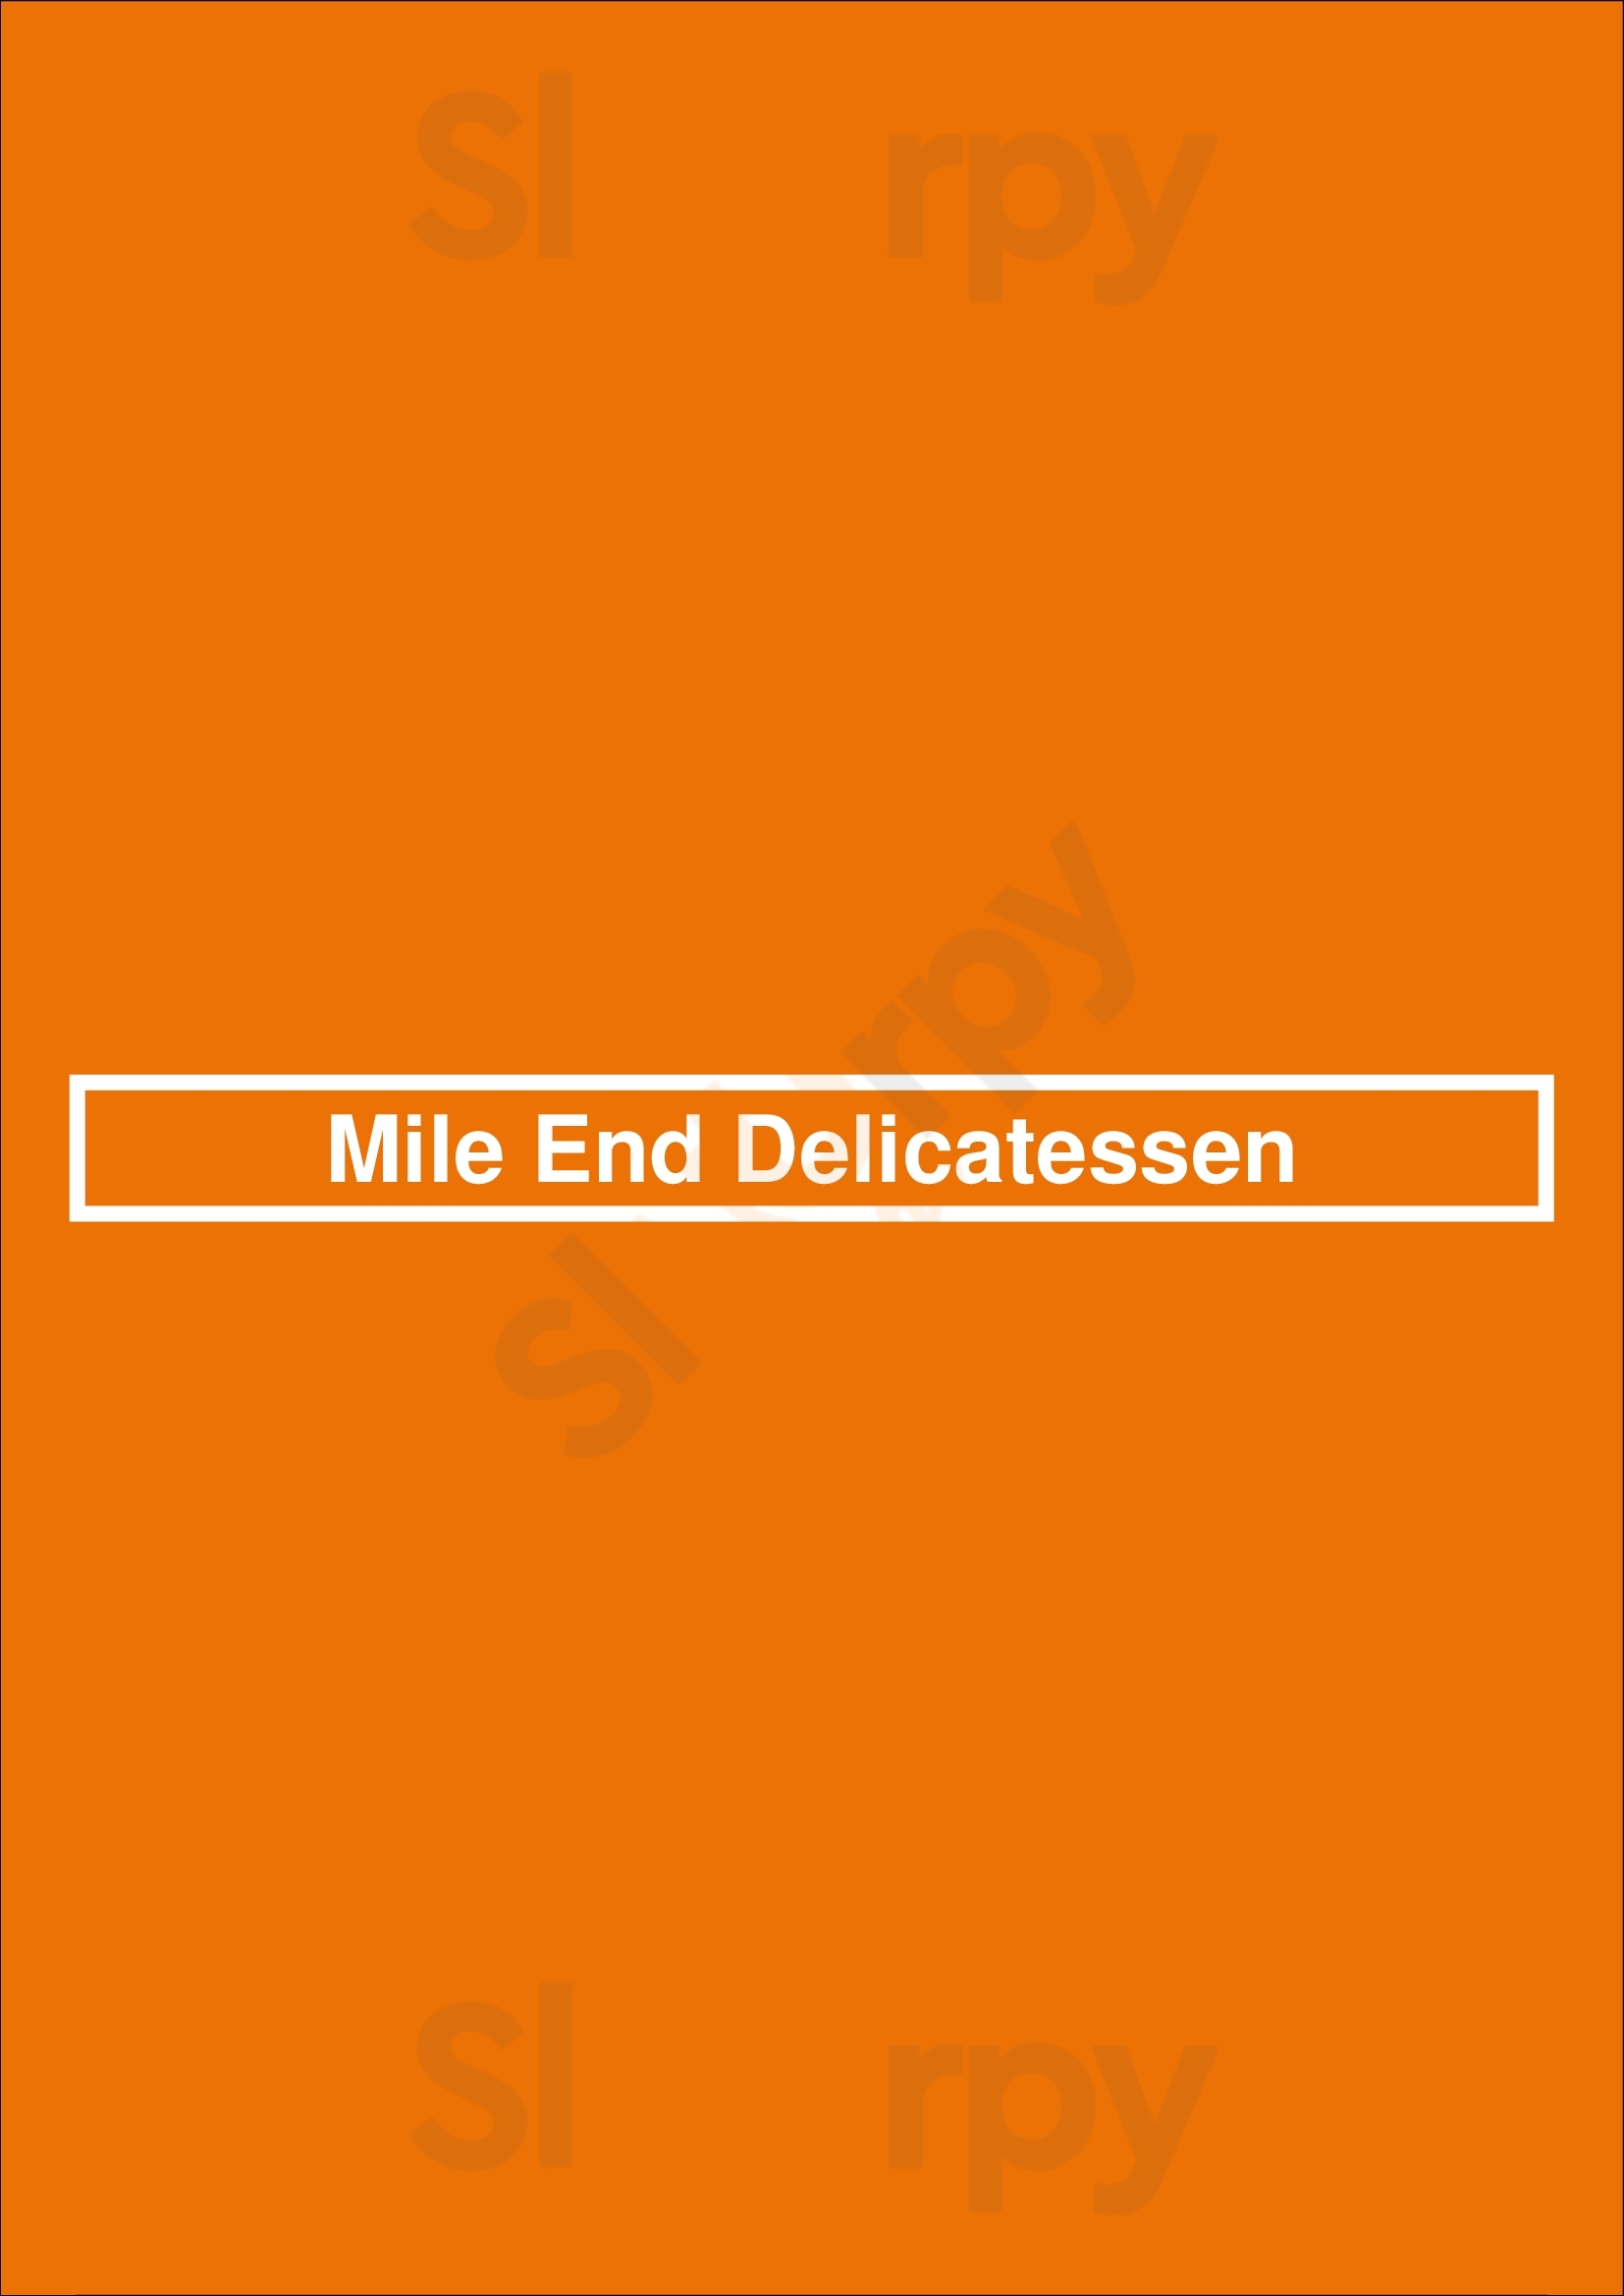 Mile End Delicatessen Birmingham Menu - 1